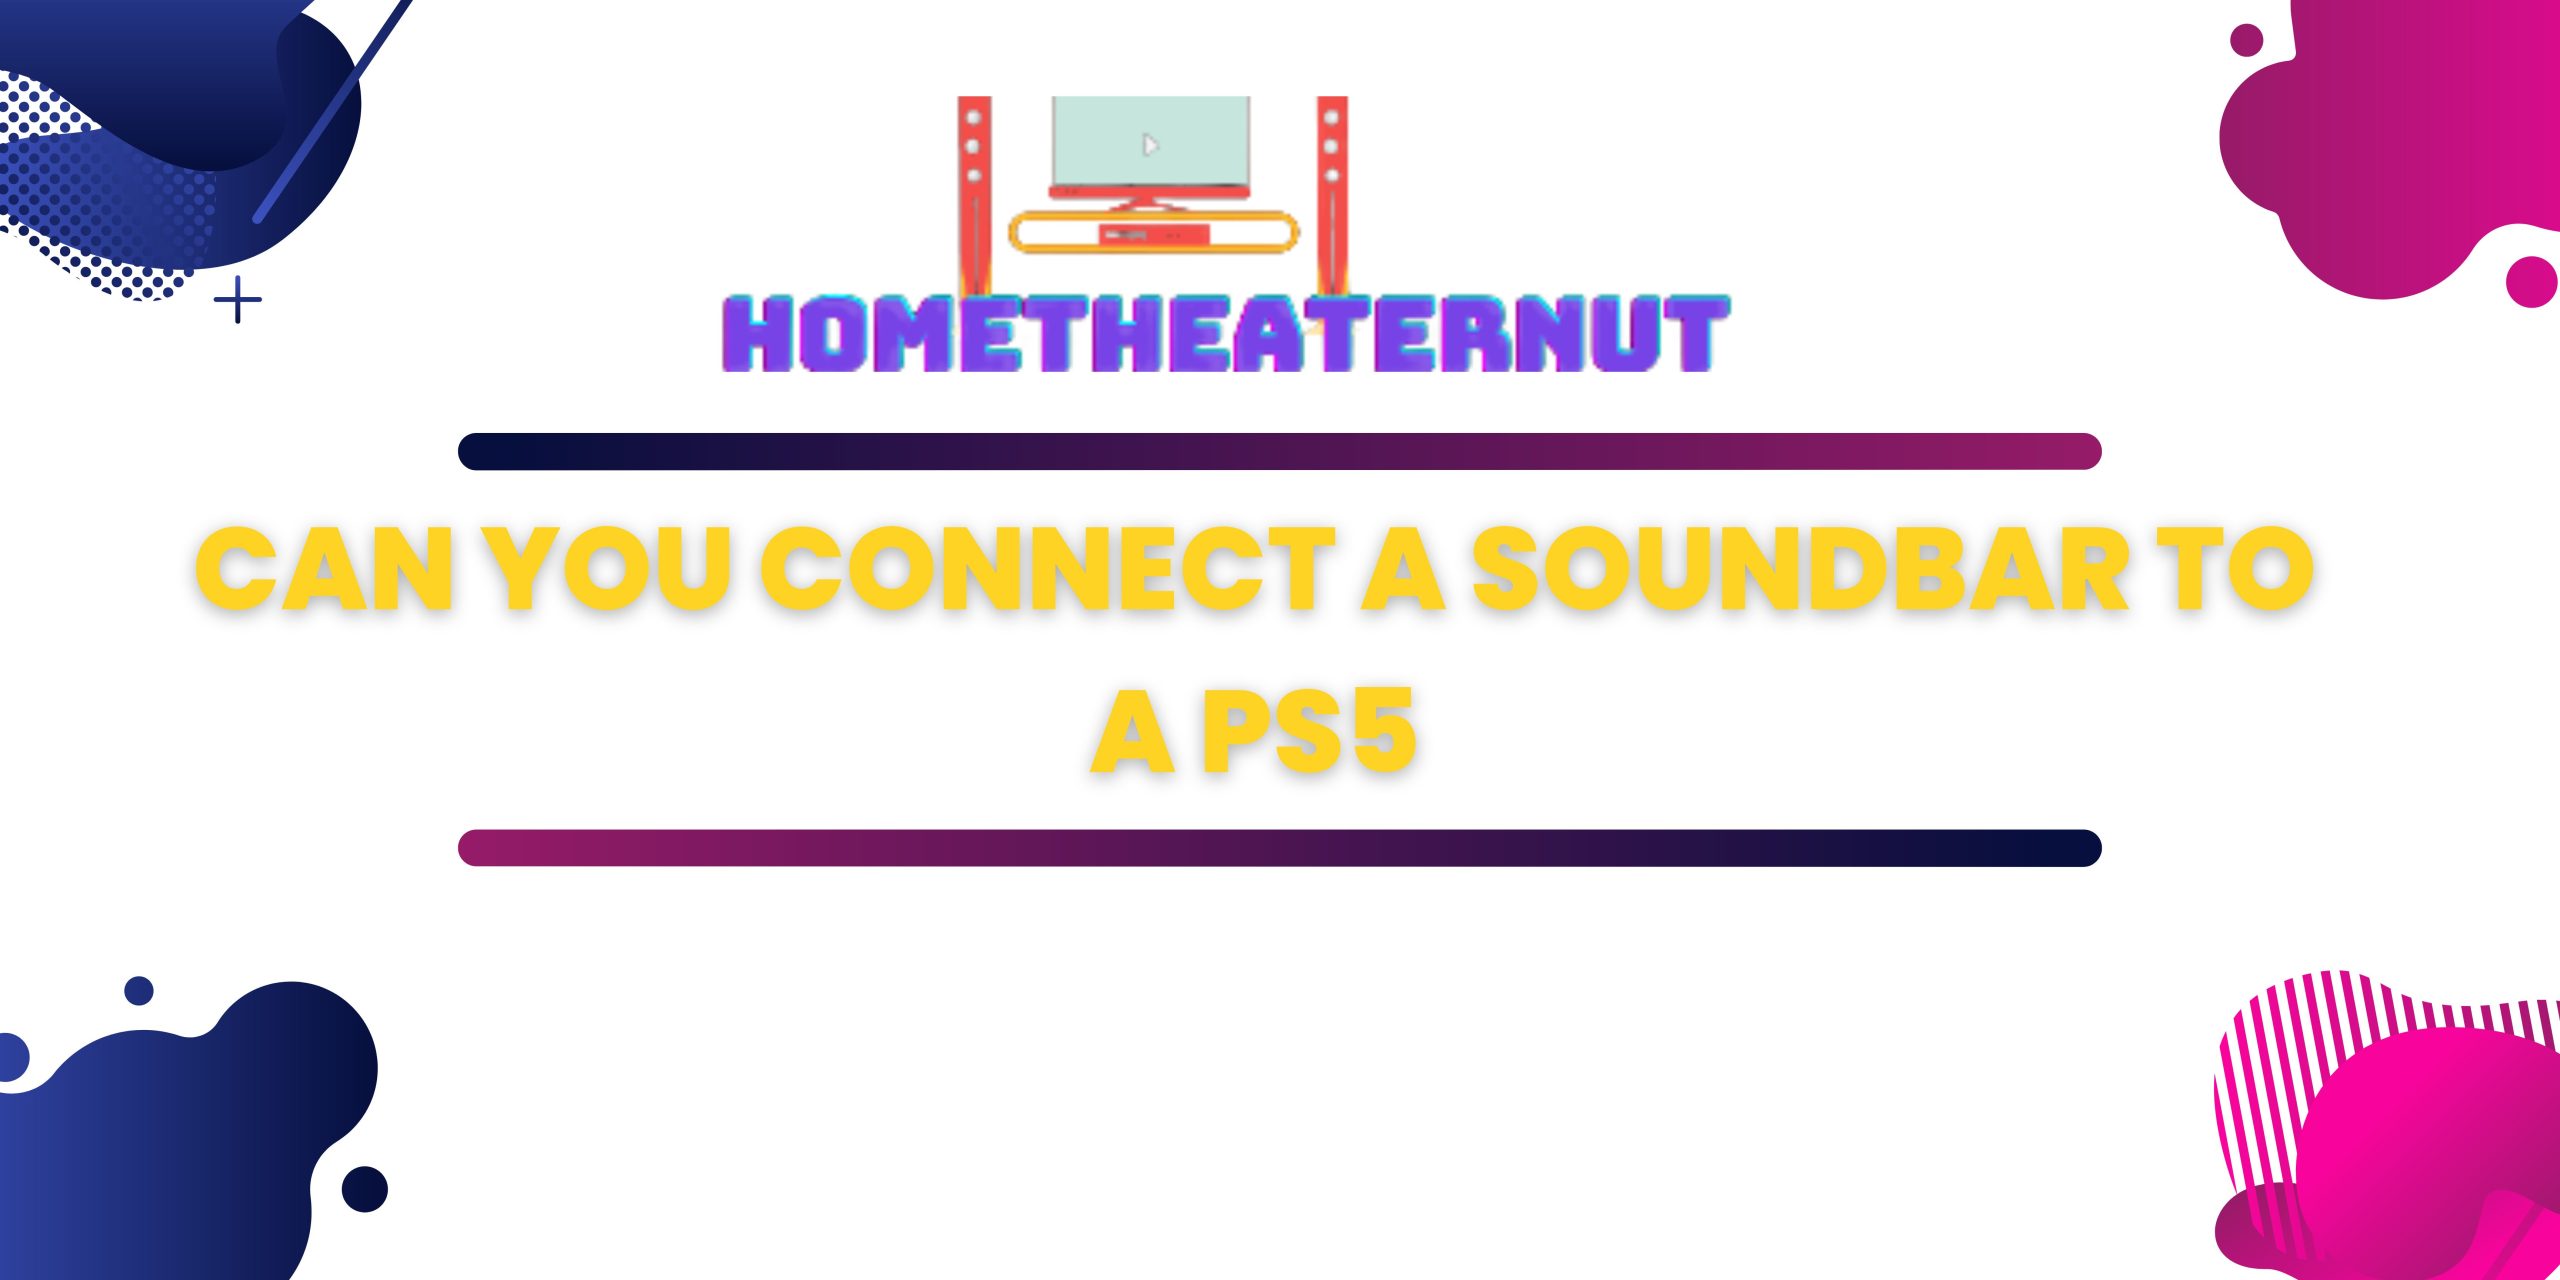 Can You Connect a Soundbar to a PS5